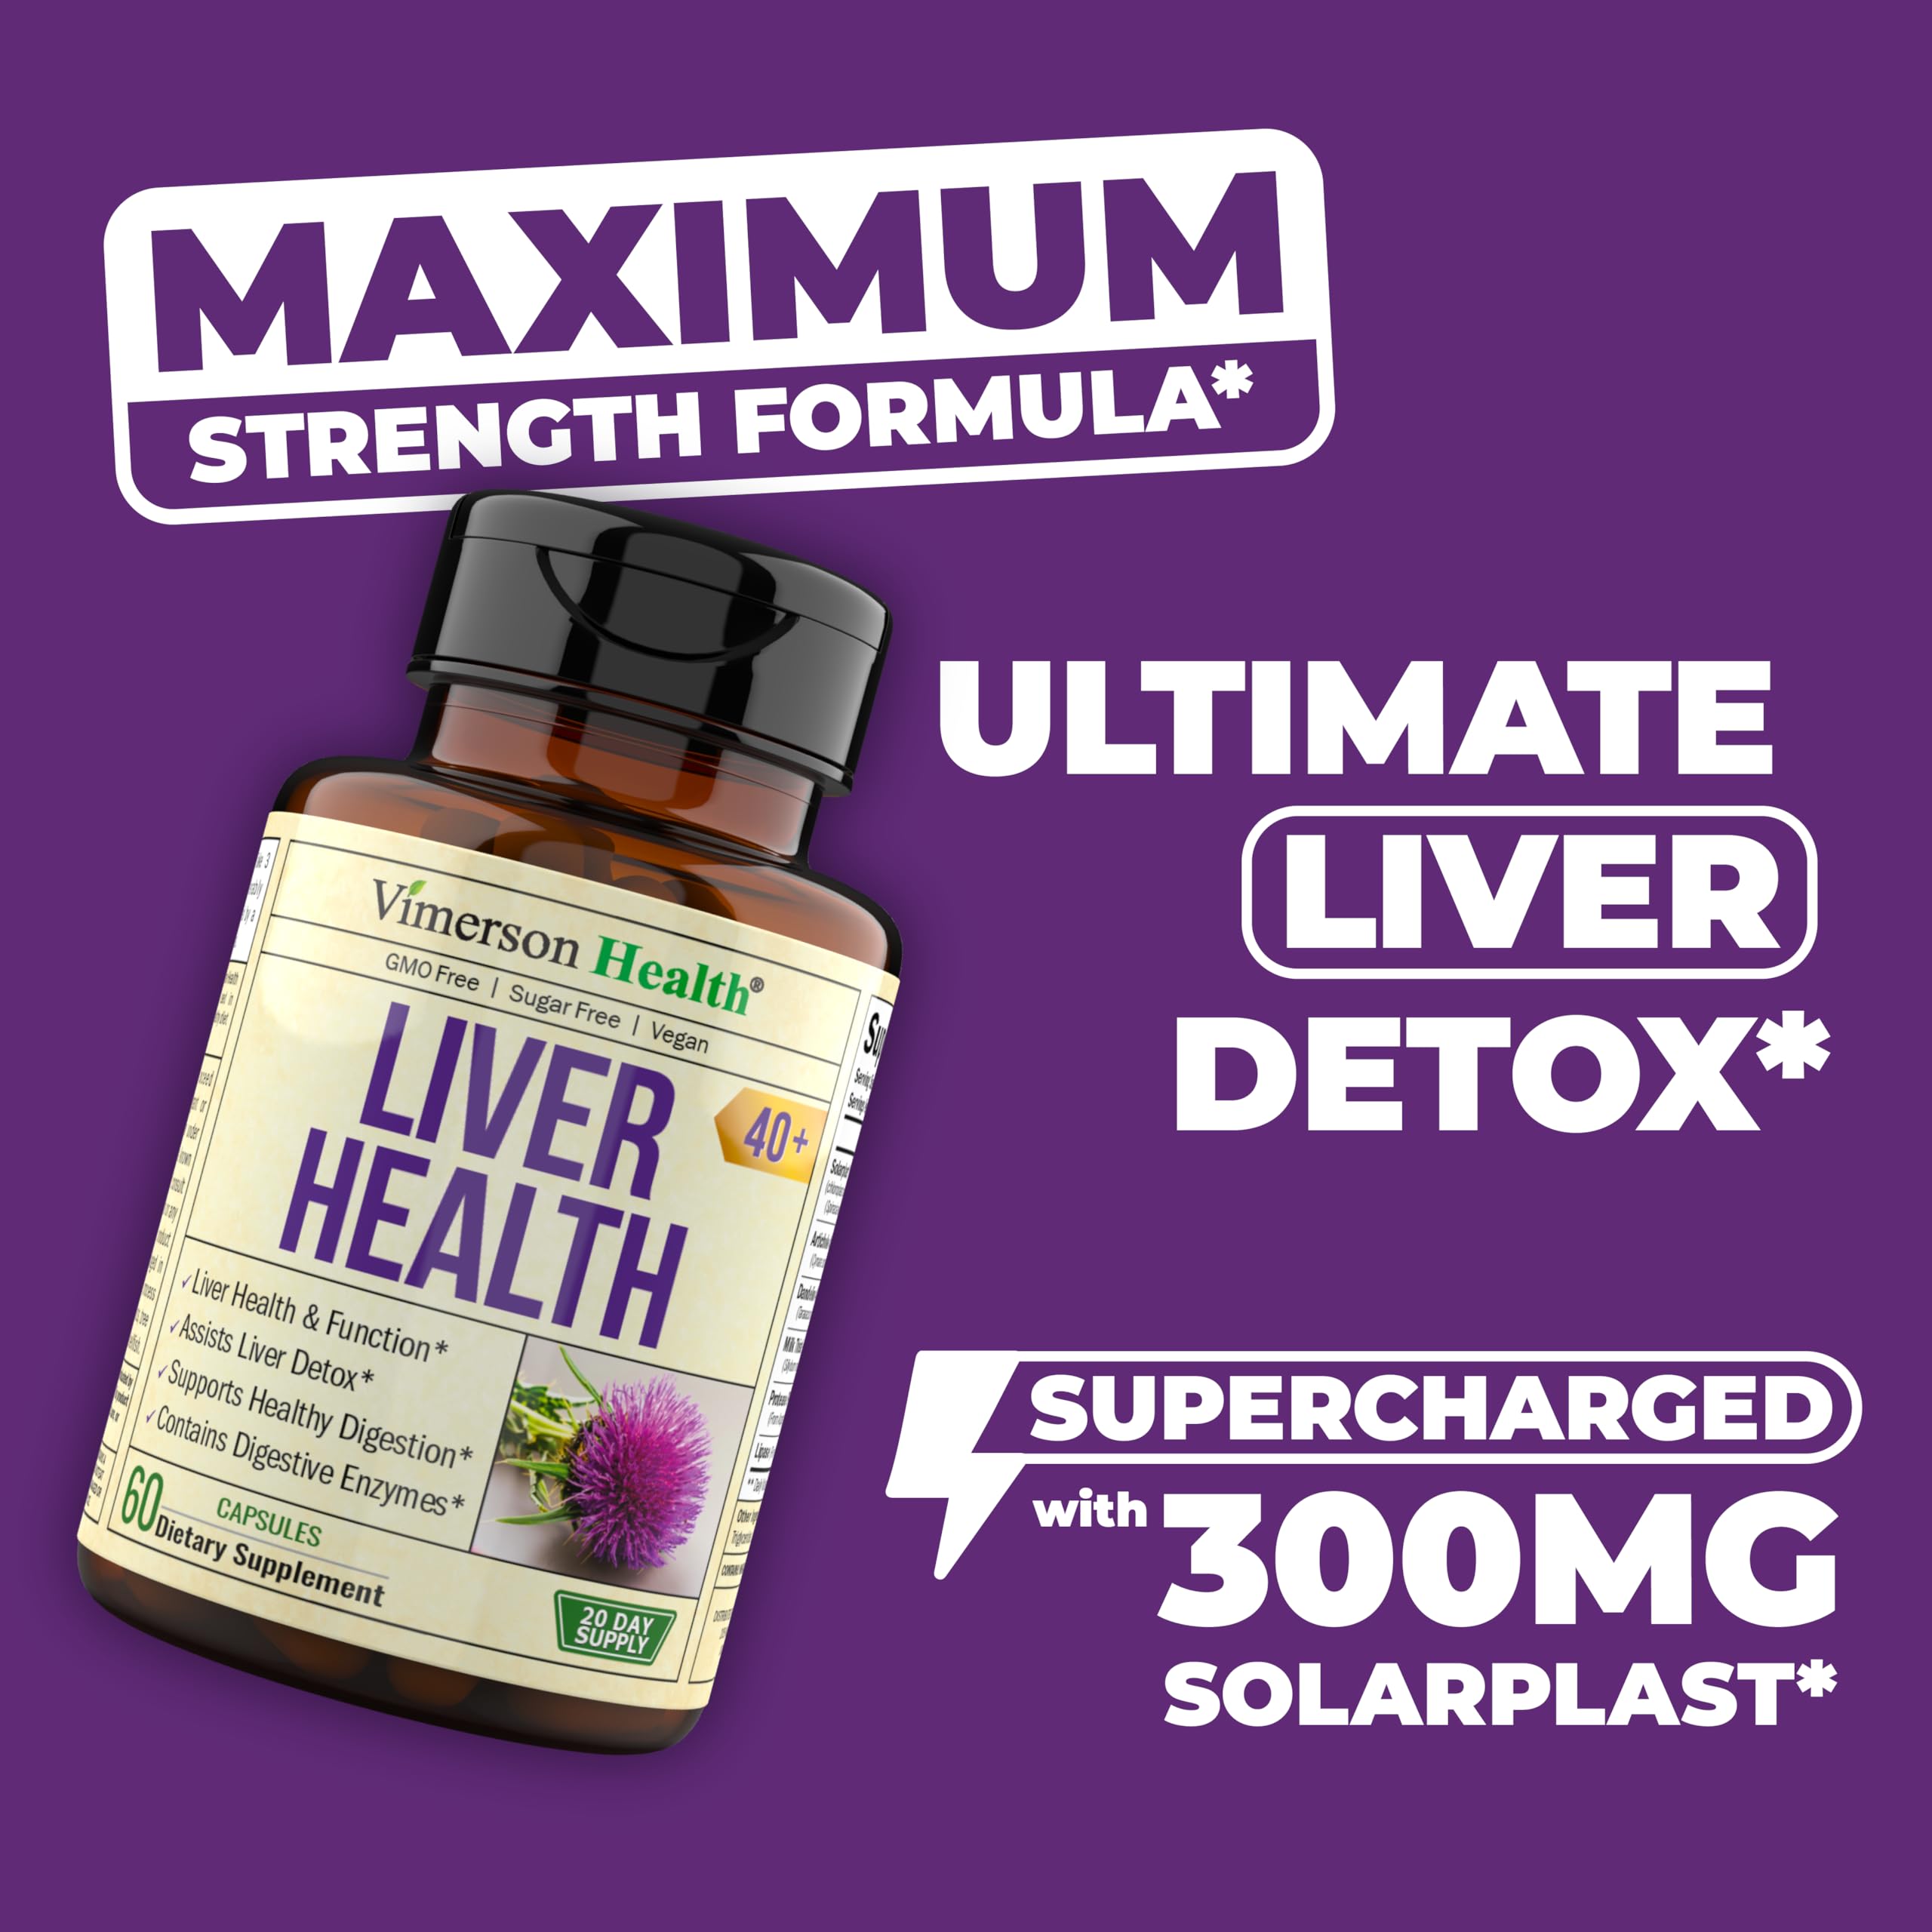 Liver Cleanse Detox & Repair 40+, 4:1 Artichoke Extract Liver Health Formula